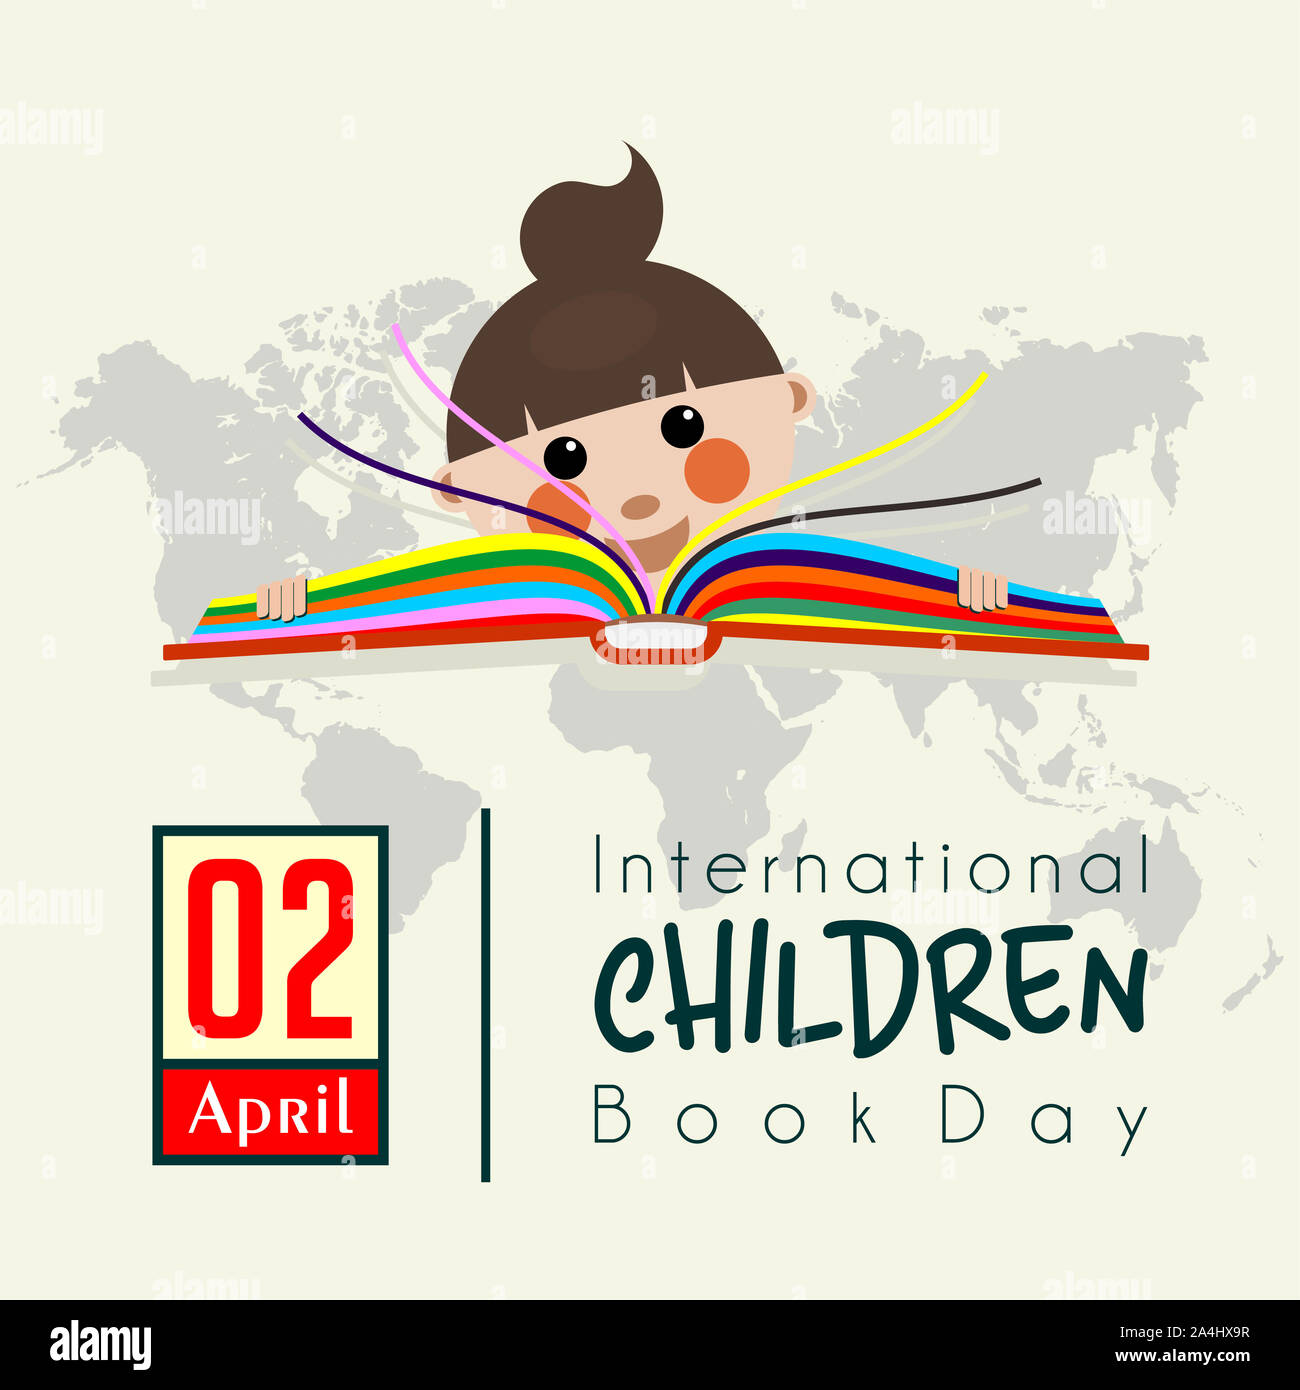 International Children's Book Day with children read color books cartoon vector design Stock Photo